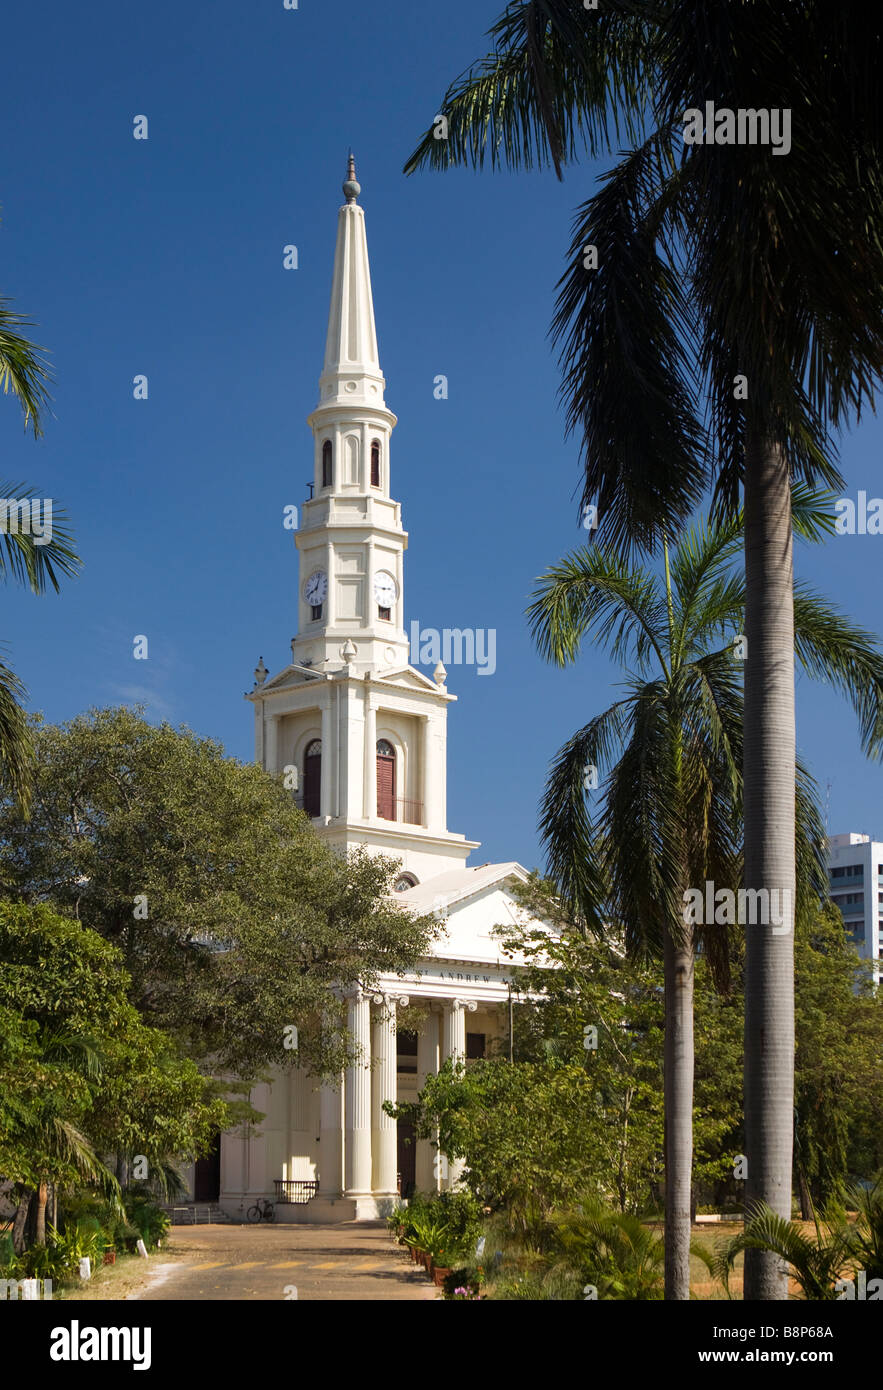 India Tamil Nadu Chennai Egmore St Andrews Church the Scottish Kirk exterior Stock Photo